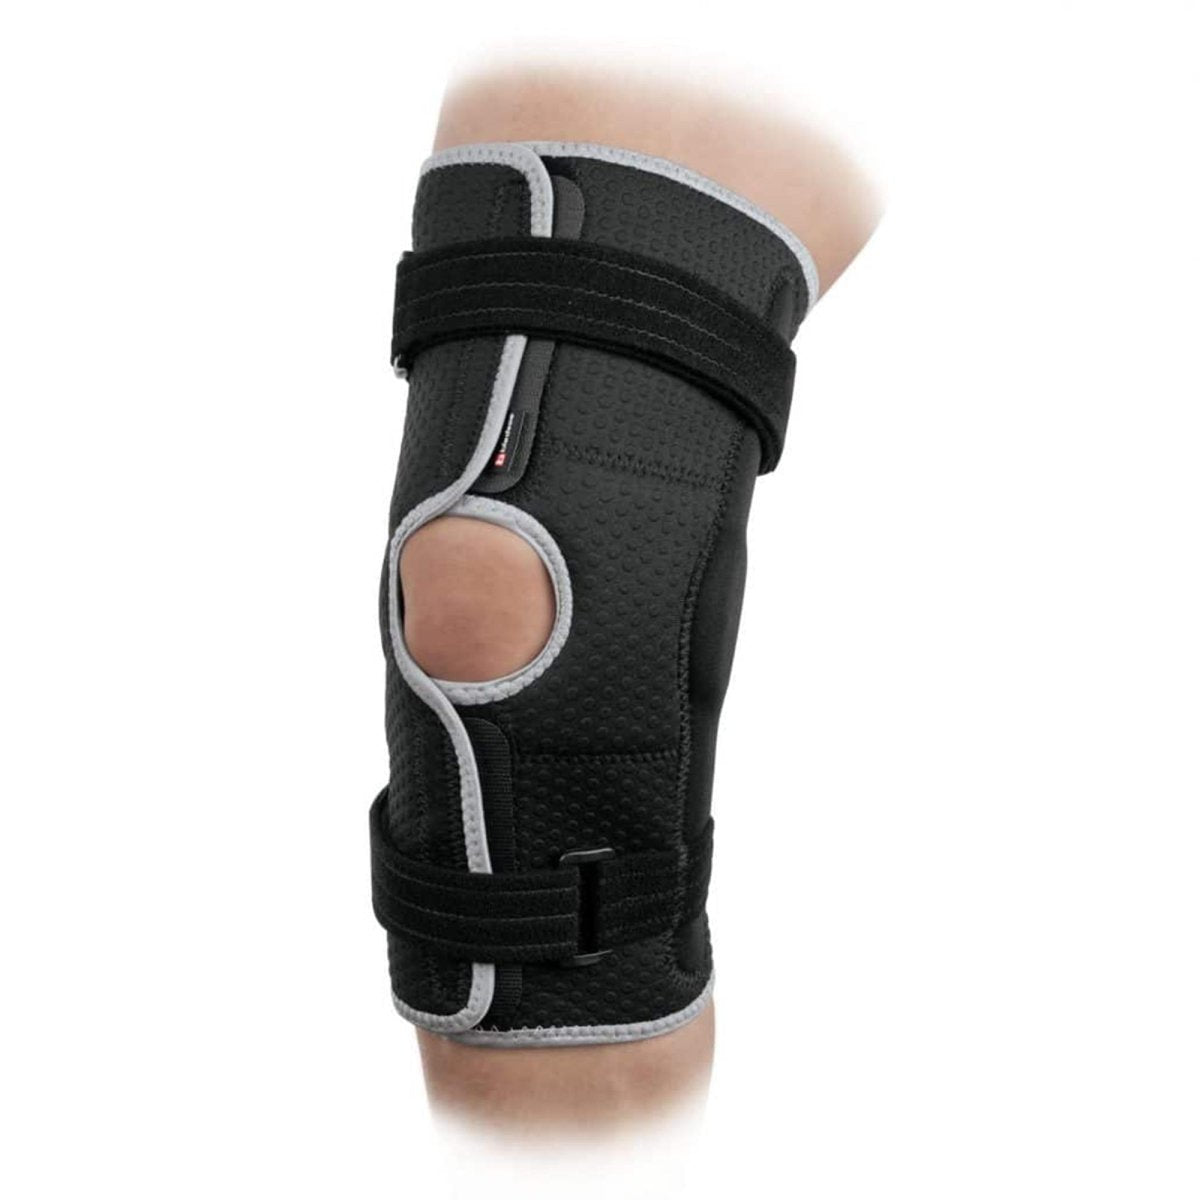 Breg 3D Hinged Neoprene Knee Brace - RK172301 - Brace Direct